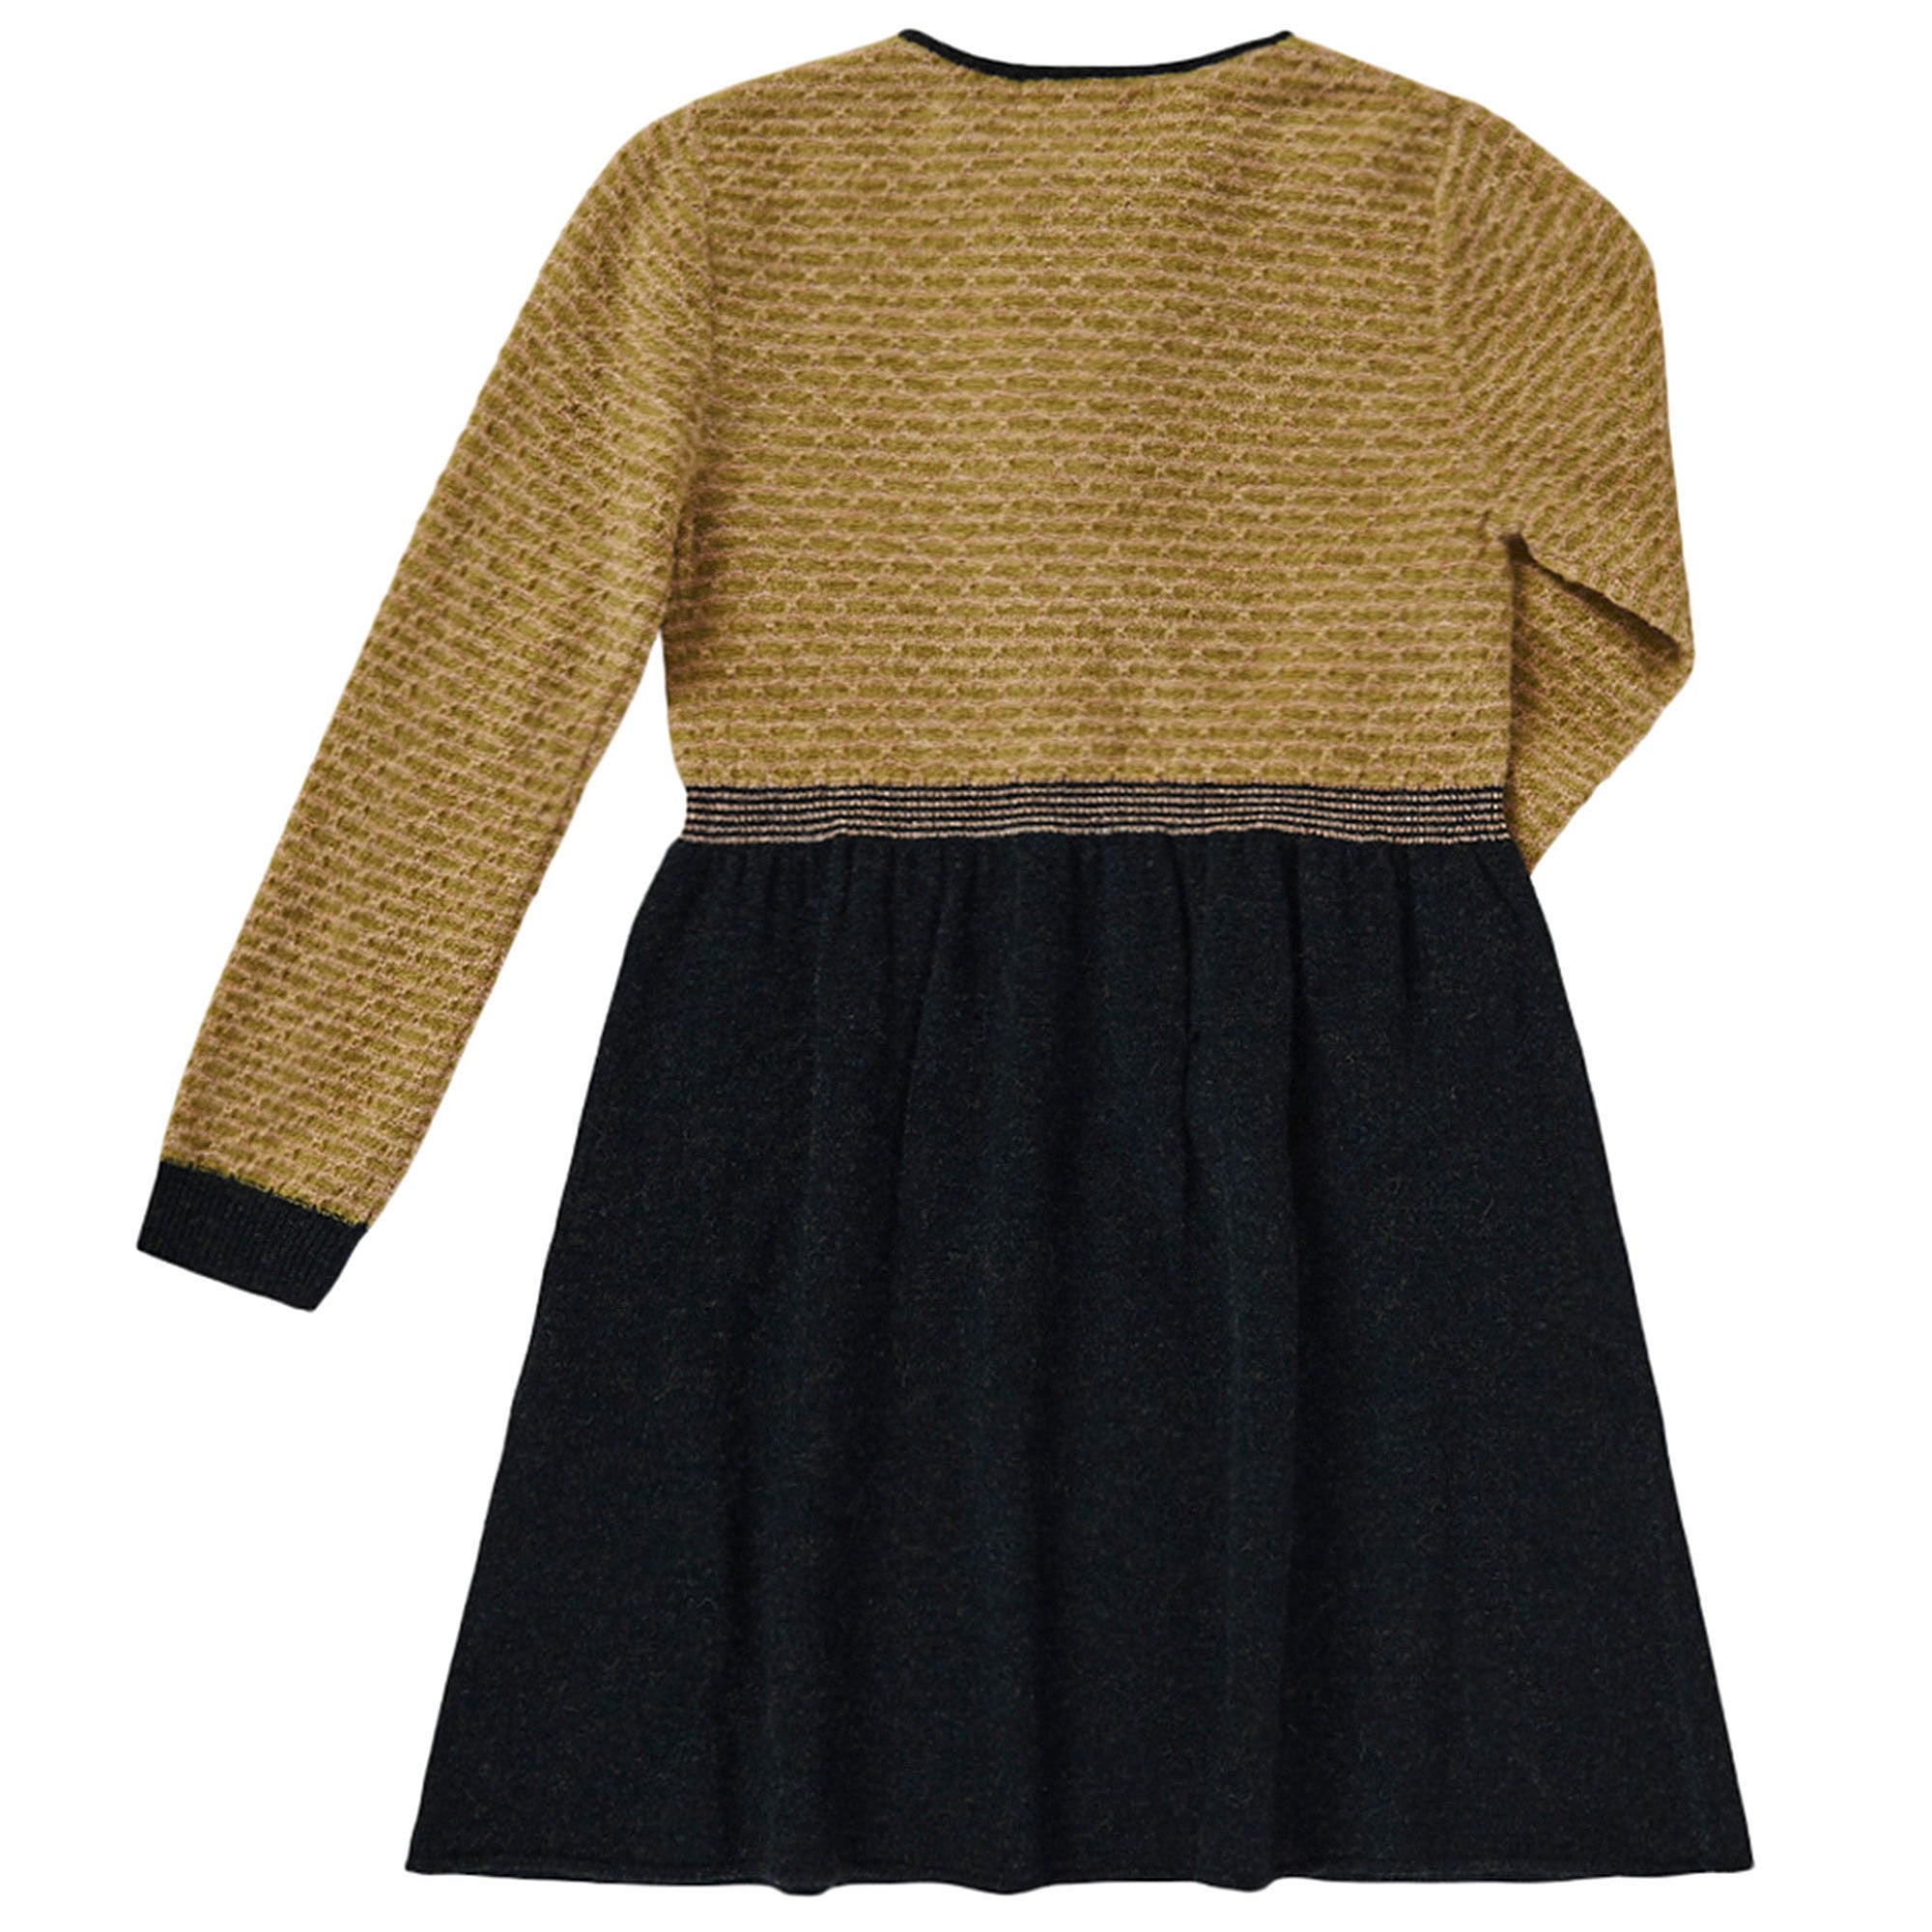 Girls Lime-green & Black Knitted Wool Dress - CÉMAROSE | Children's Fashion Store - 2